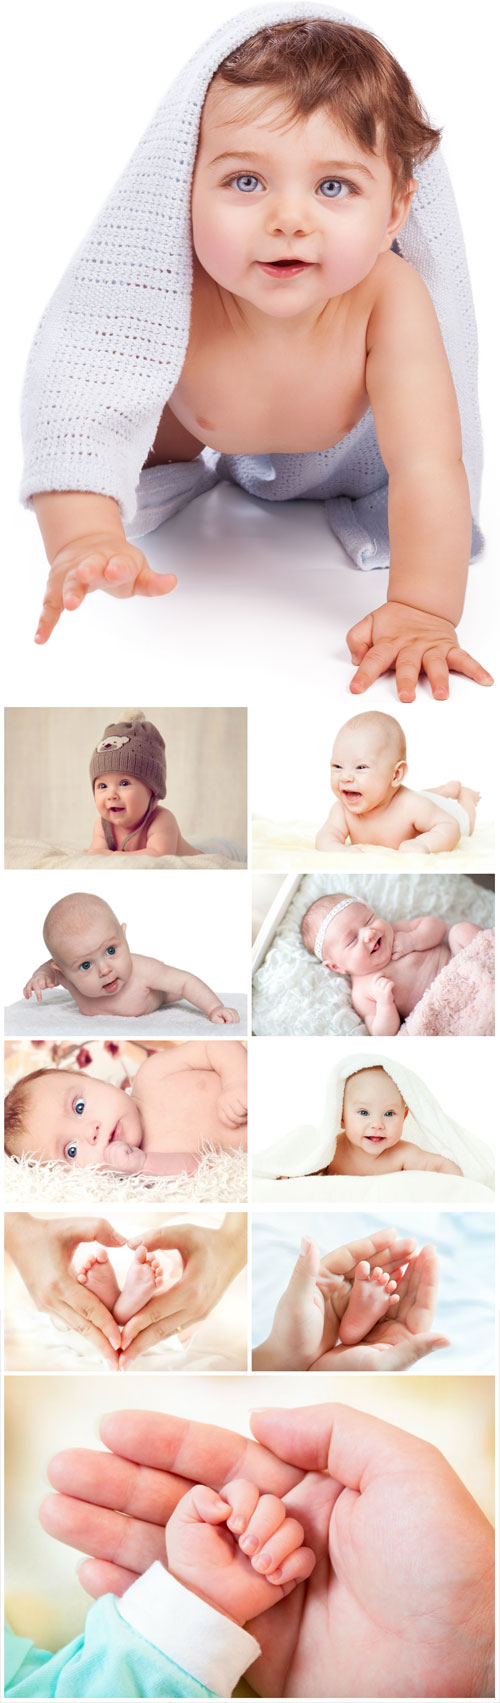 Baby feet in mom's hand, little children stock photo